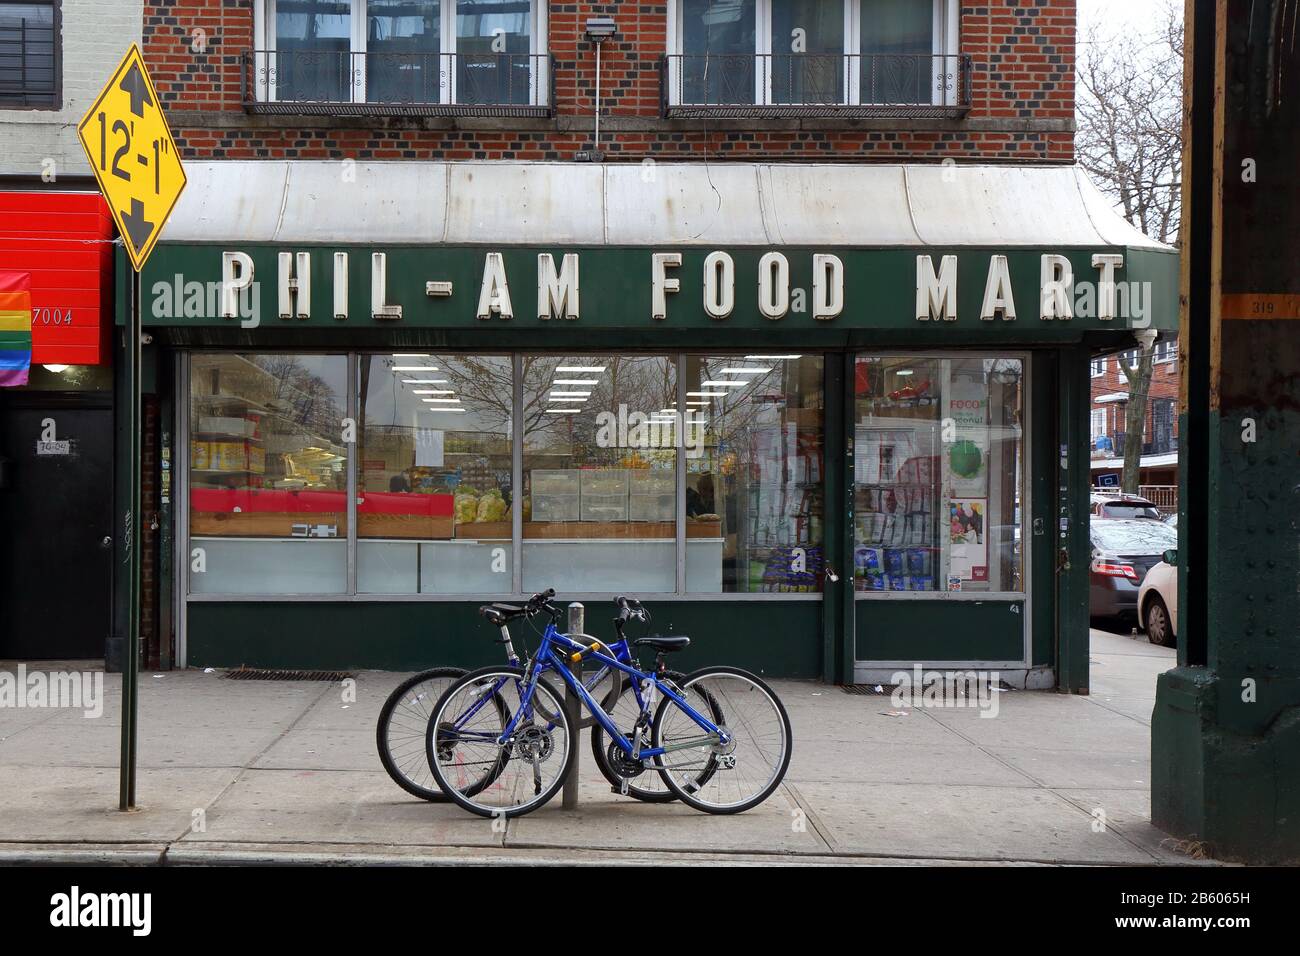 Phil-am Food Mart, 40-03 70th Street, Queens, NY. Escaparate exterior de una tienda de comestibles filipina en el barrio de Woodside. Foto de stock